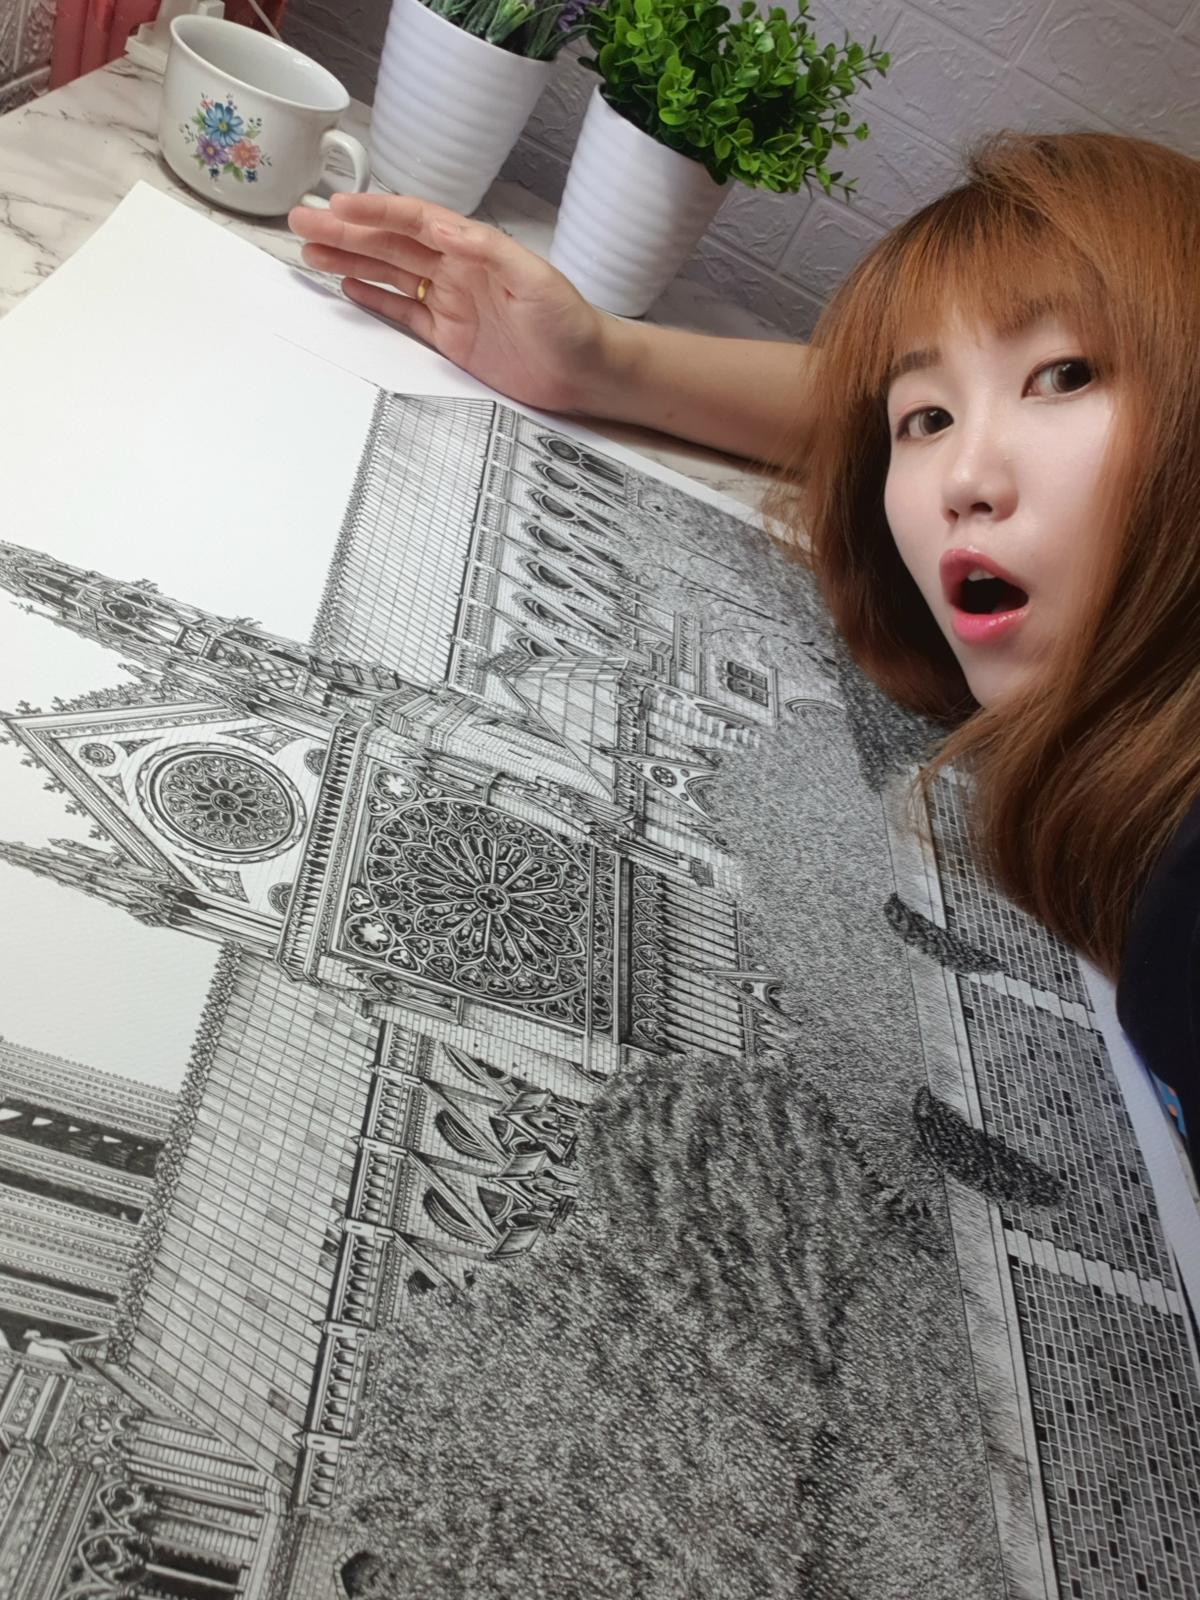 Emi Nakajima with the drawing of Notre Dame de Paris. (Courtesy of <a href="https://www.instagram.com/emi_nkjm/">Emi Nakajima</a>)